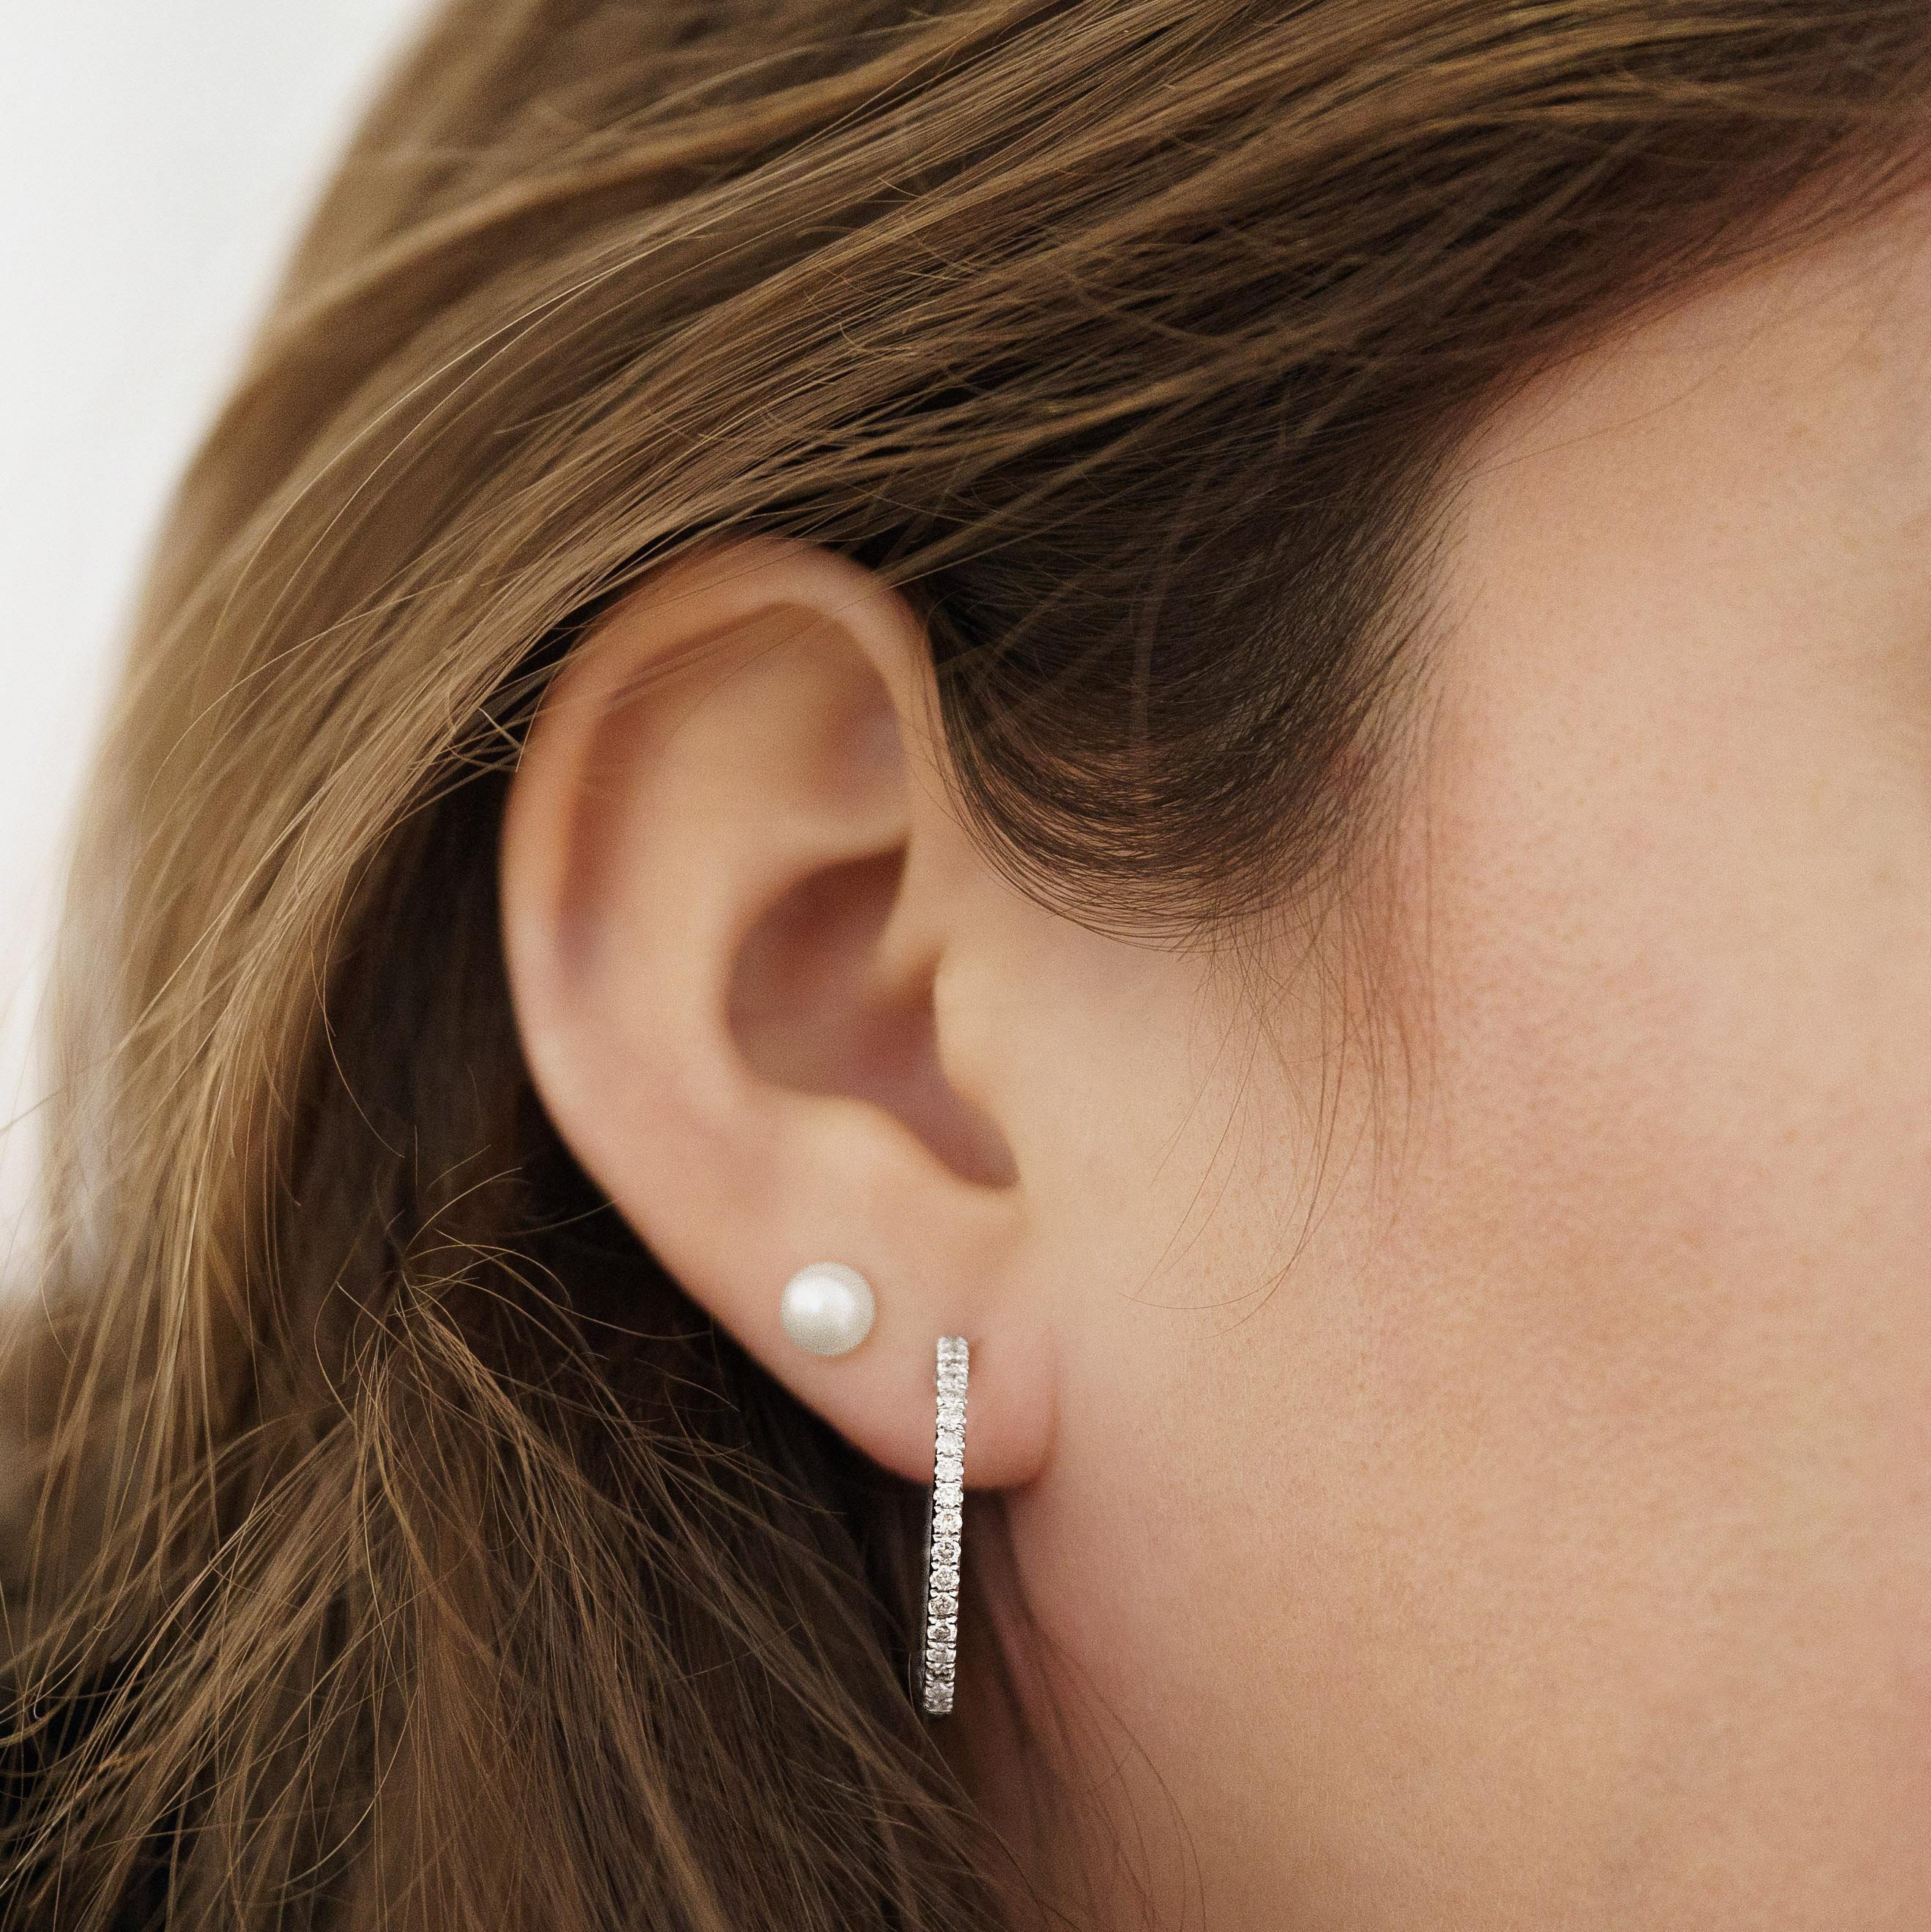 Natual 1.2 Carat Diamond Inside-Out Hoop Earrings in 14K Gold For Sale 1